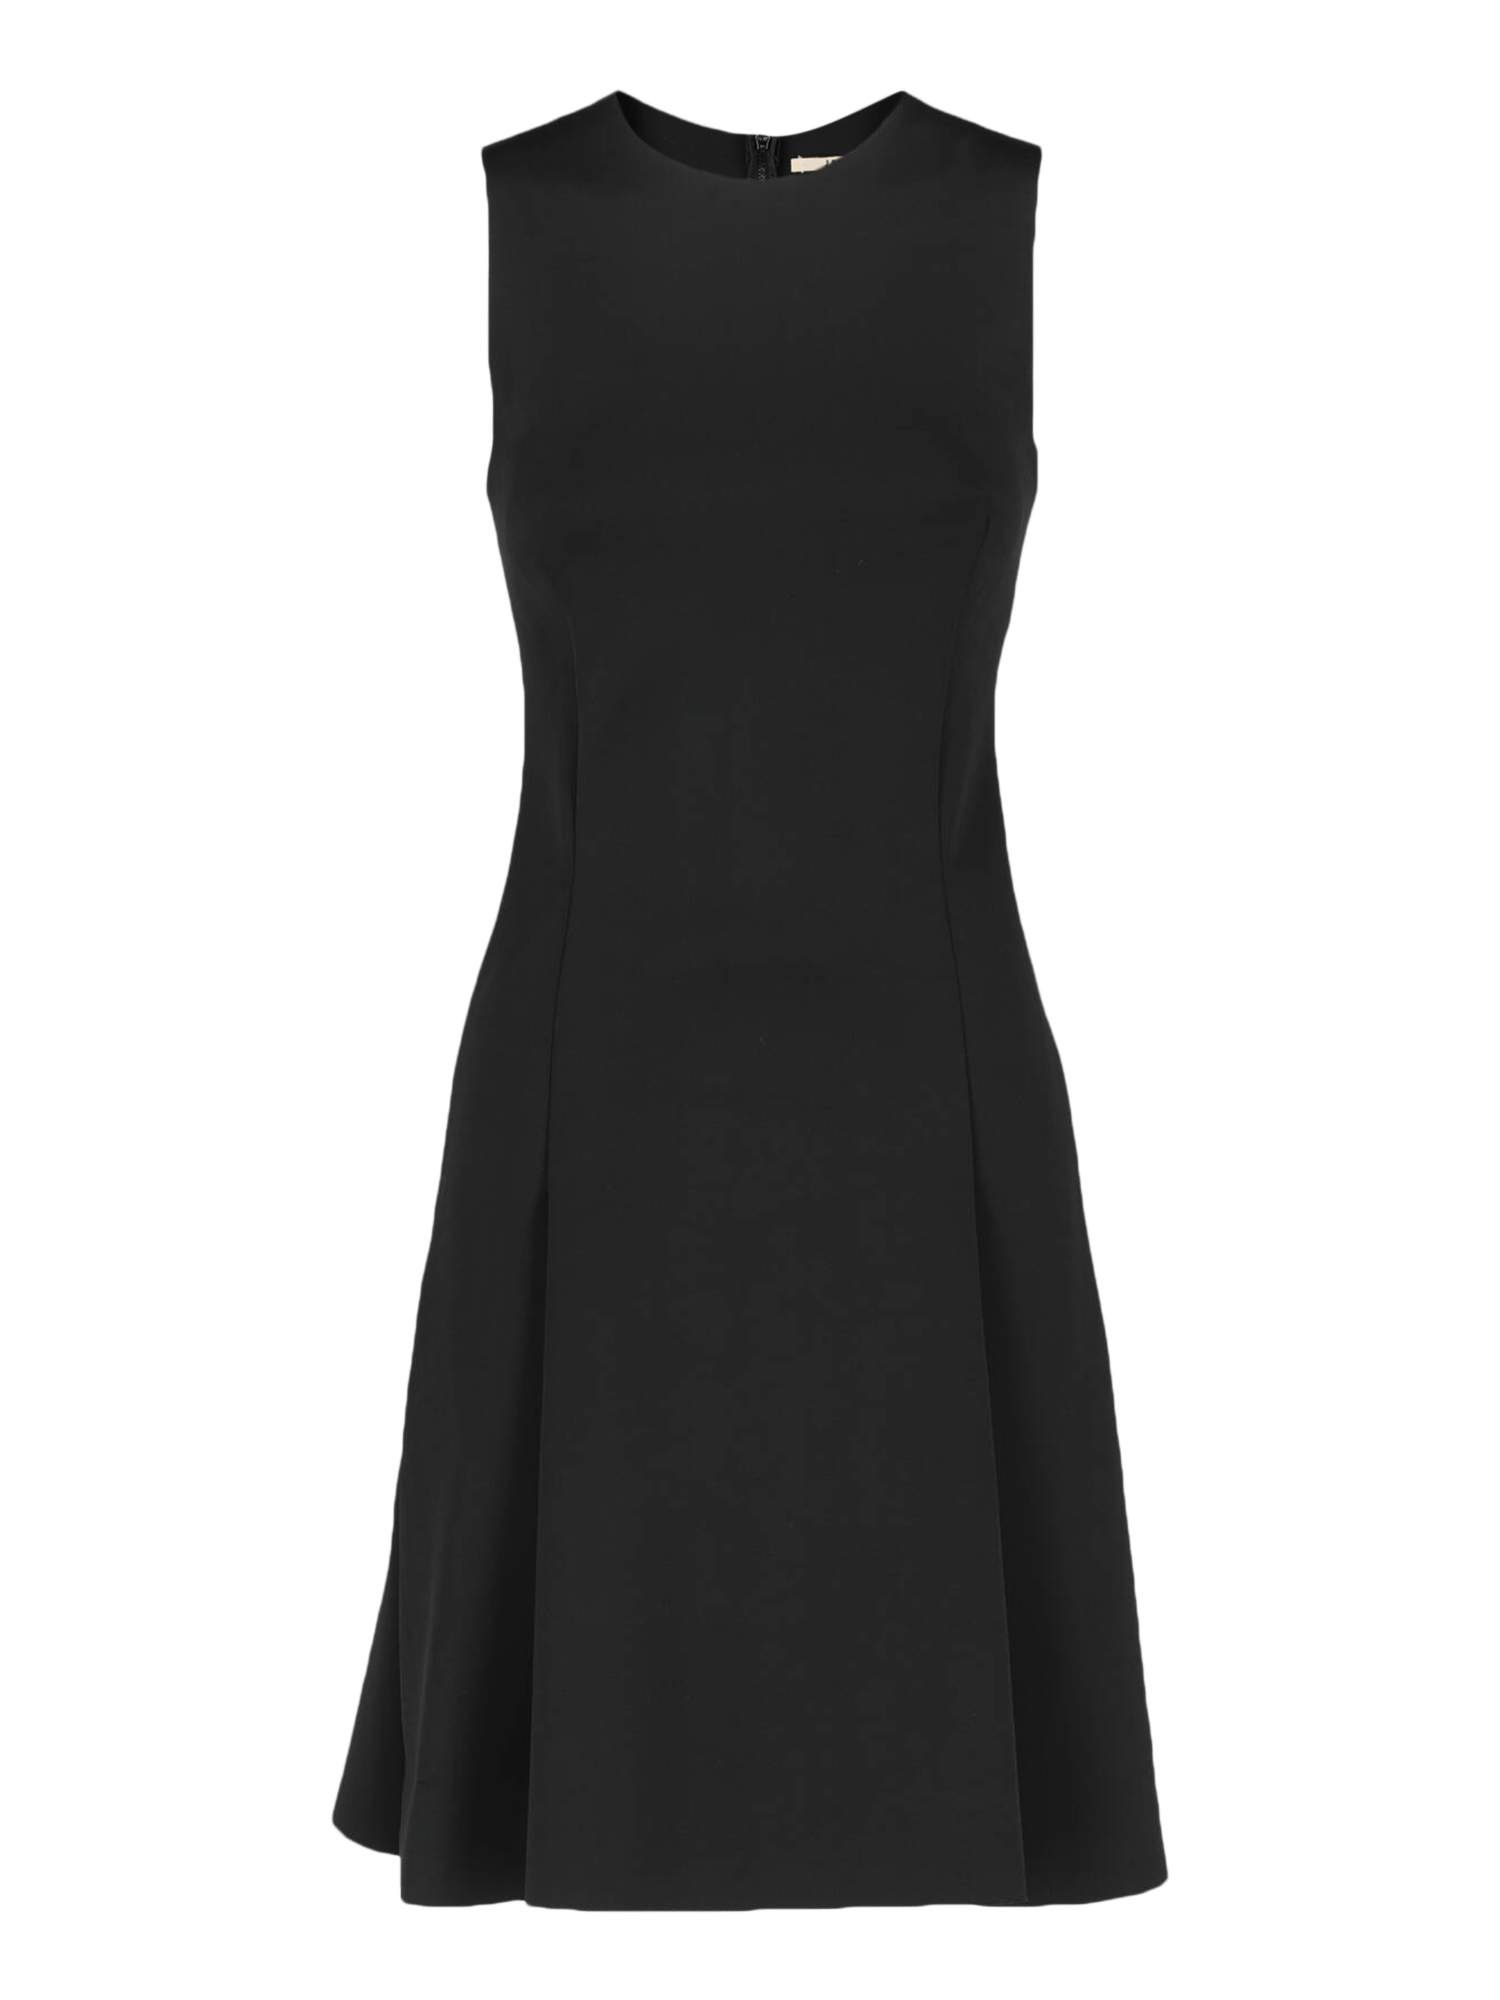 Robes Pour Femme - J Brand - En Synthetic Fibers Black - Taille:  -